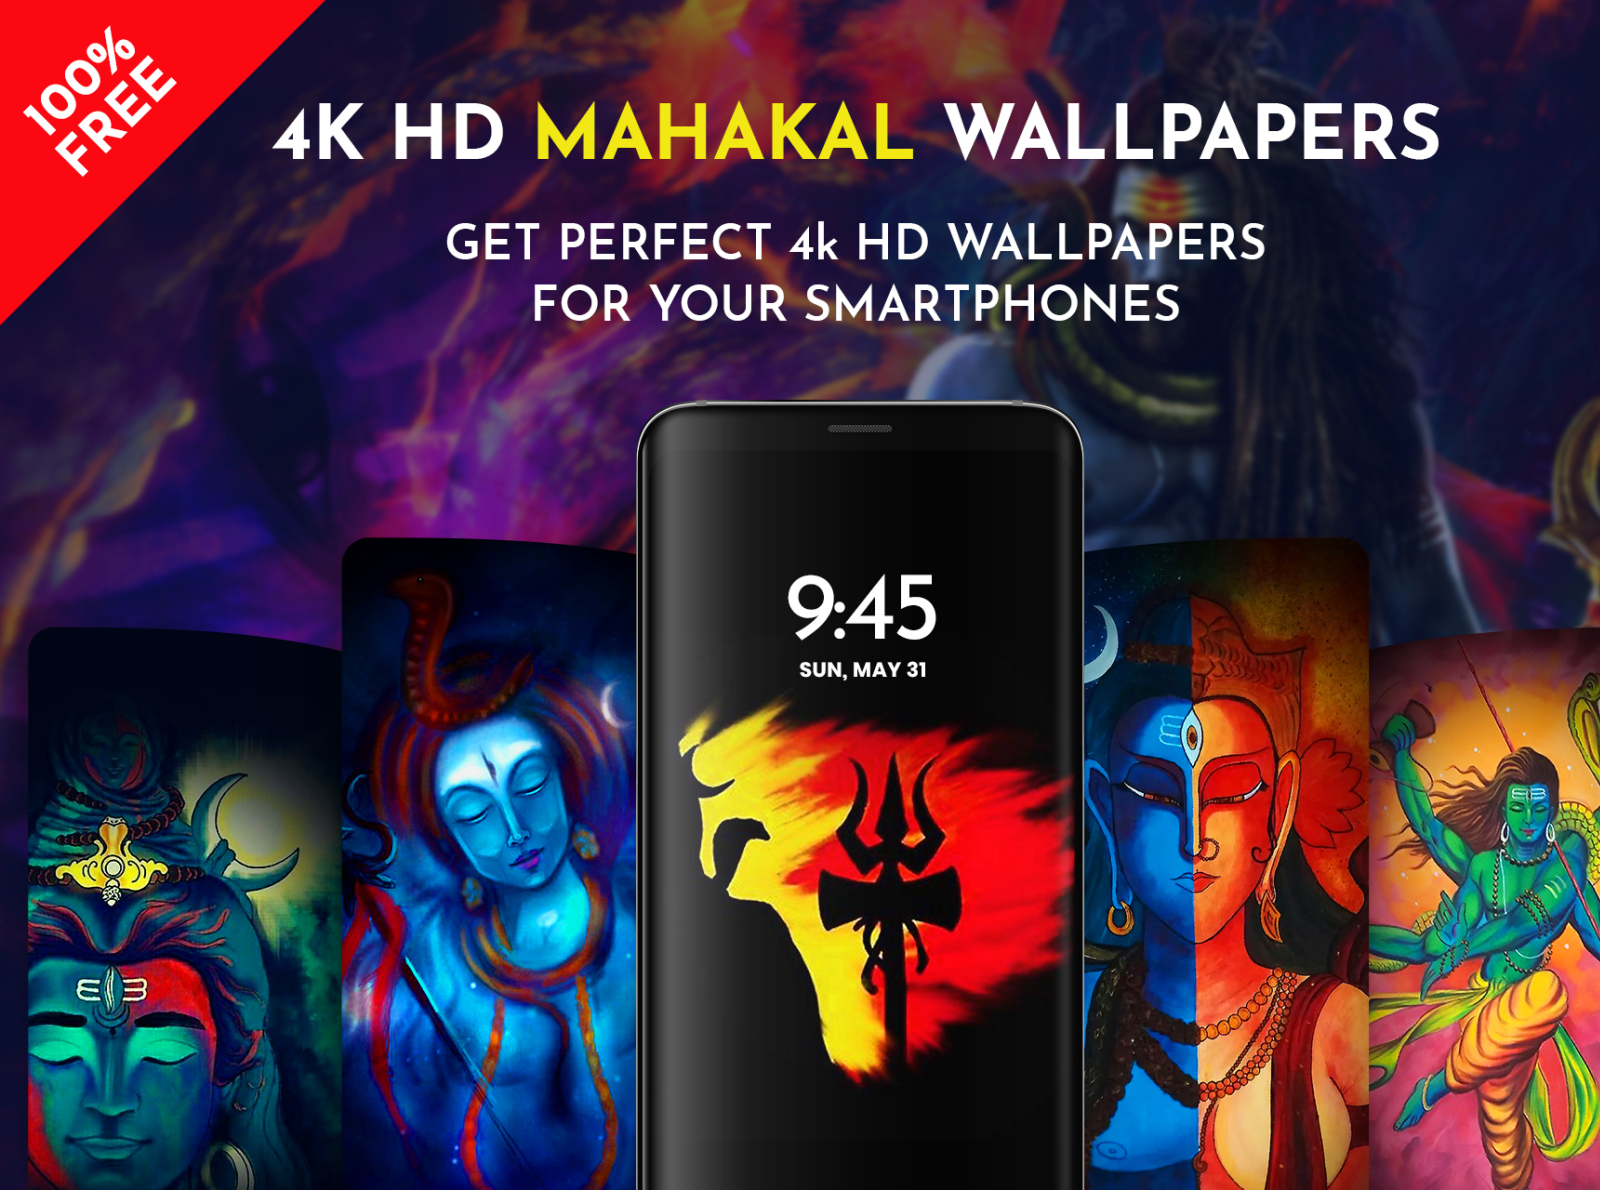 Mahakal Wallpapers By 4khdwall On Dribbble